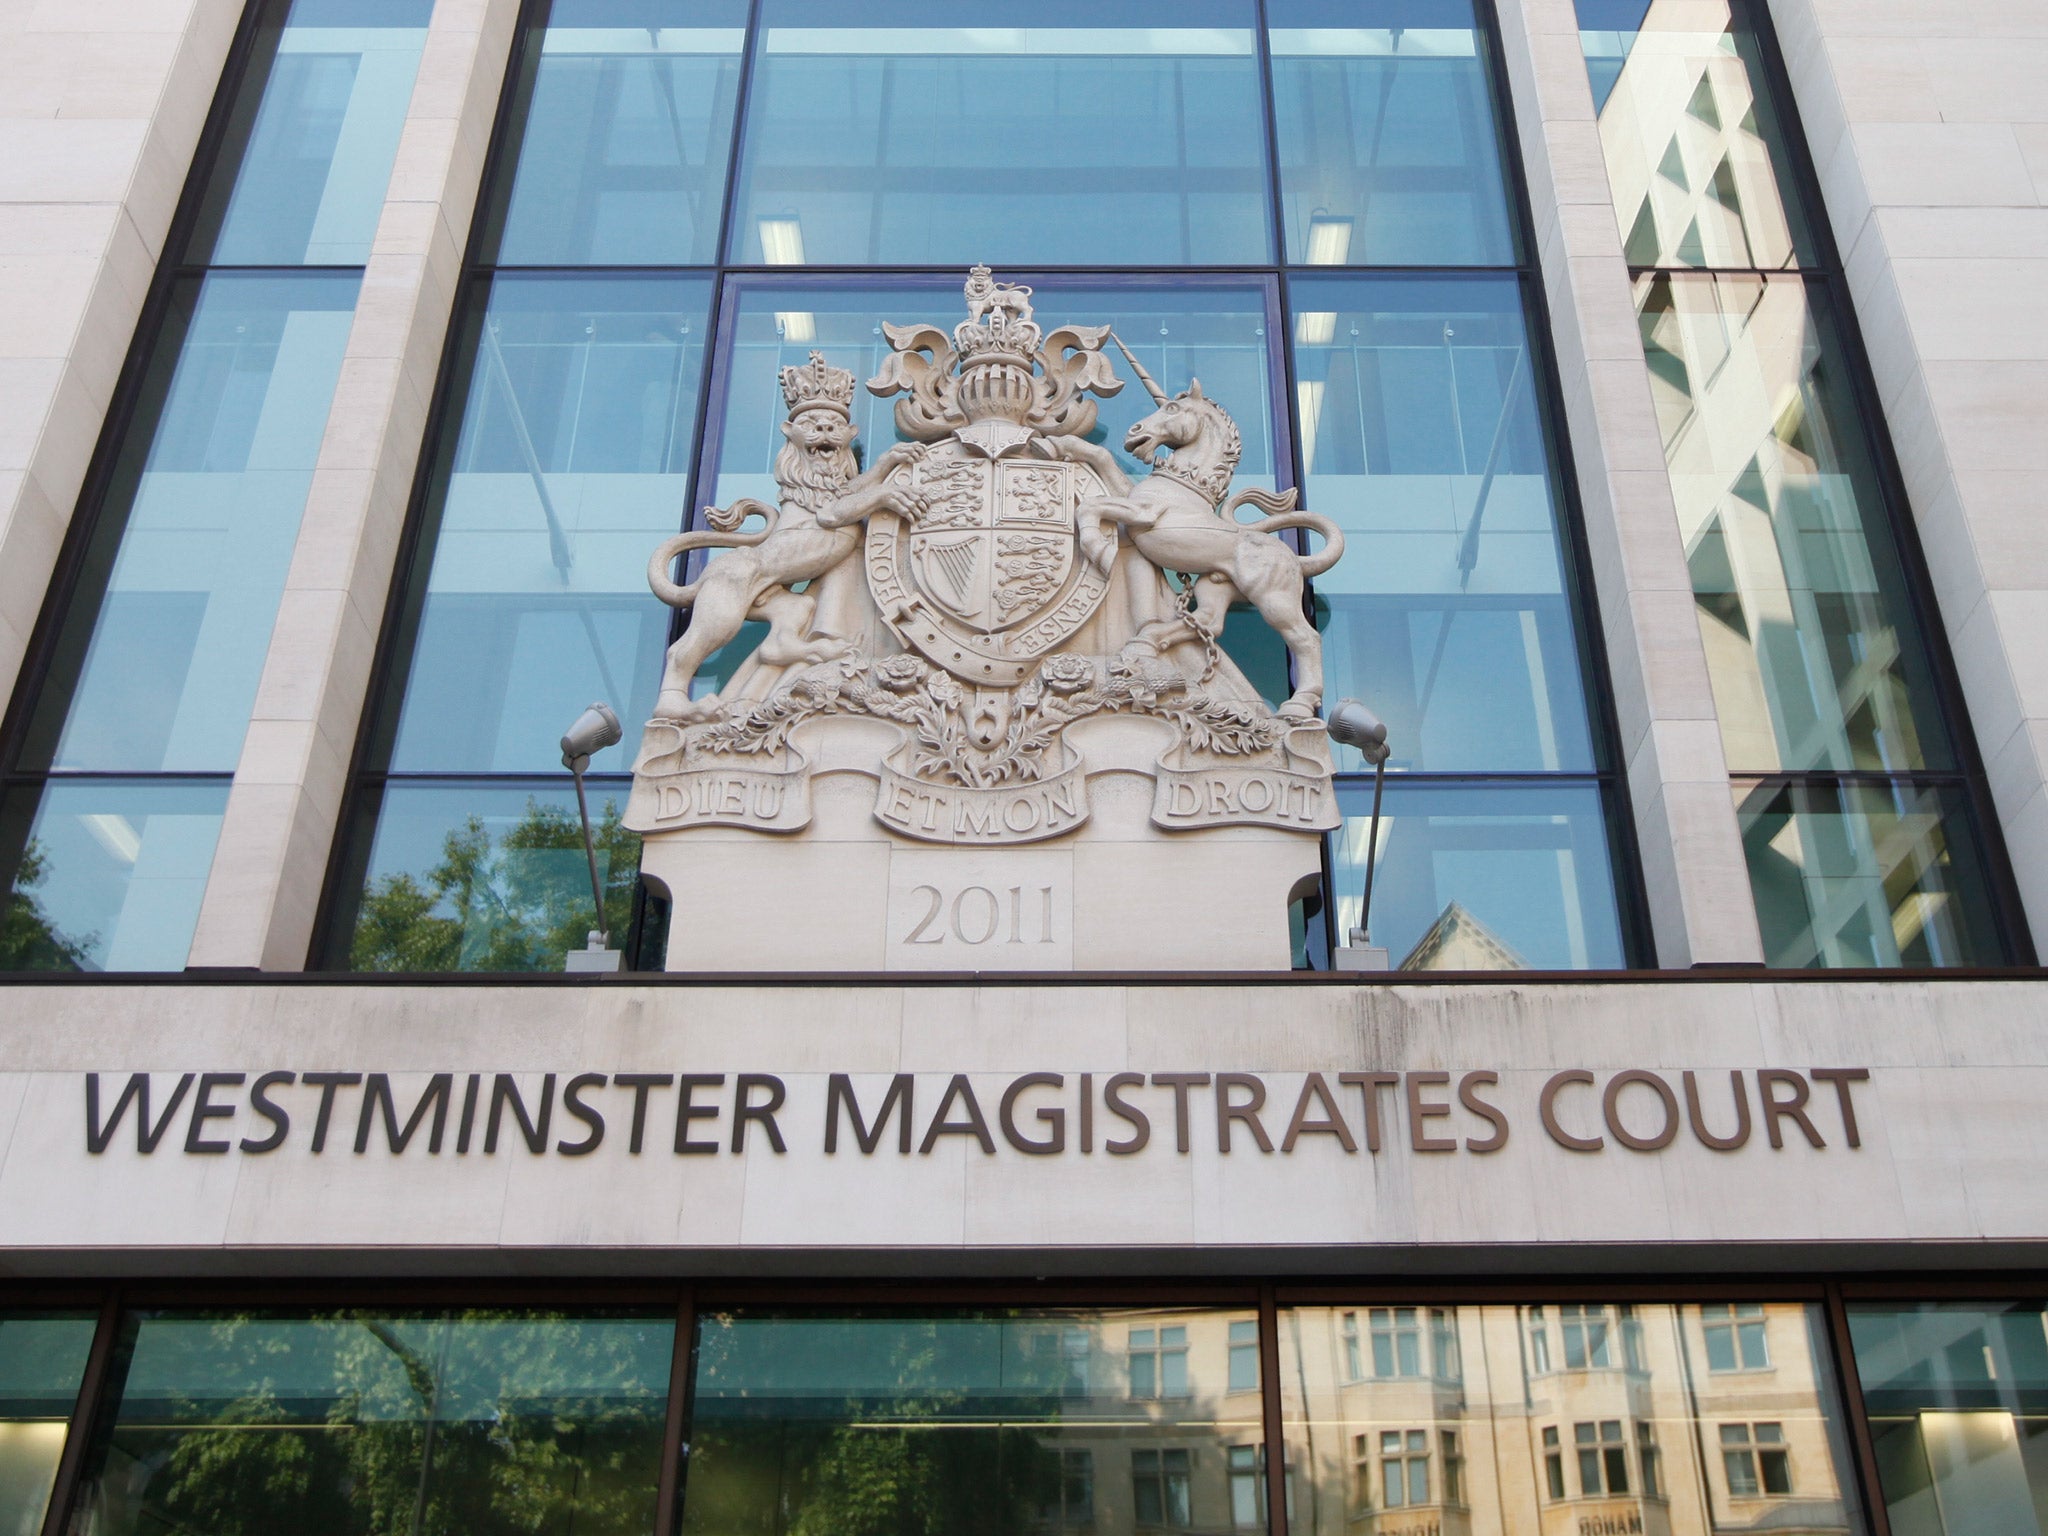 Graham Johnson will appear before London's Westminster Magistrates' Court on November 6